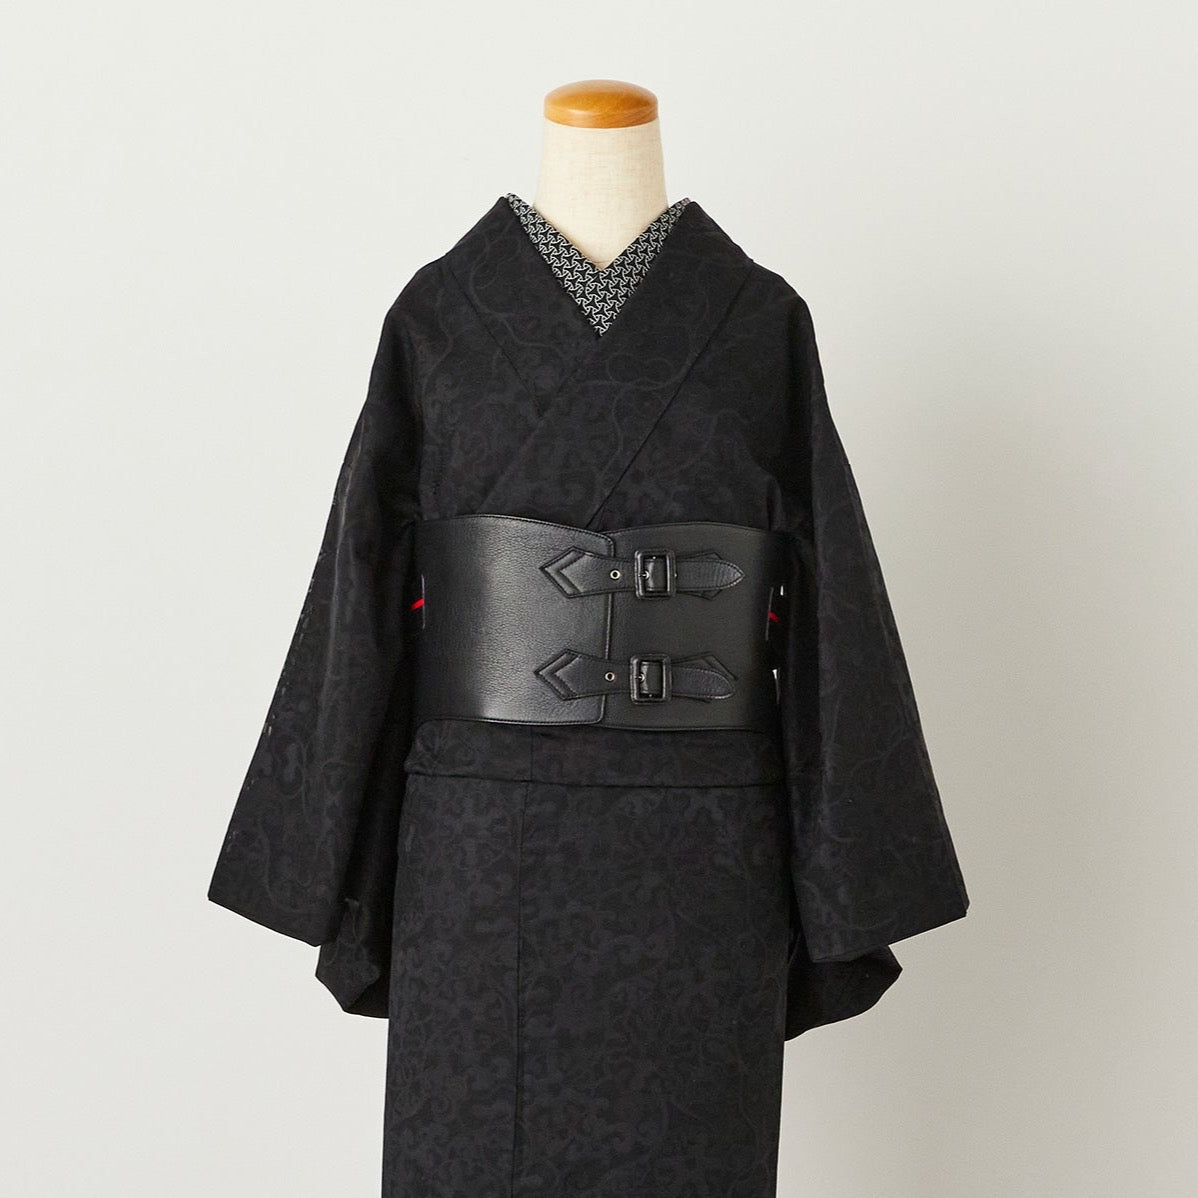 Half-collar "Kumiwaza" Black background/Black KAPUKI original